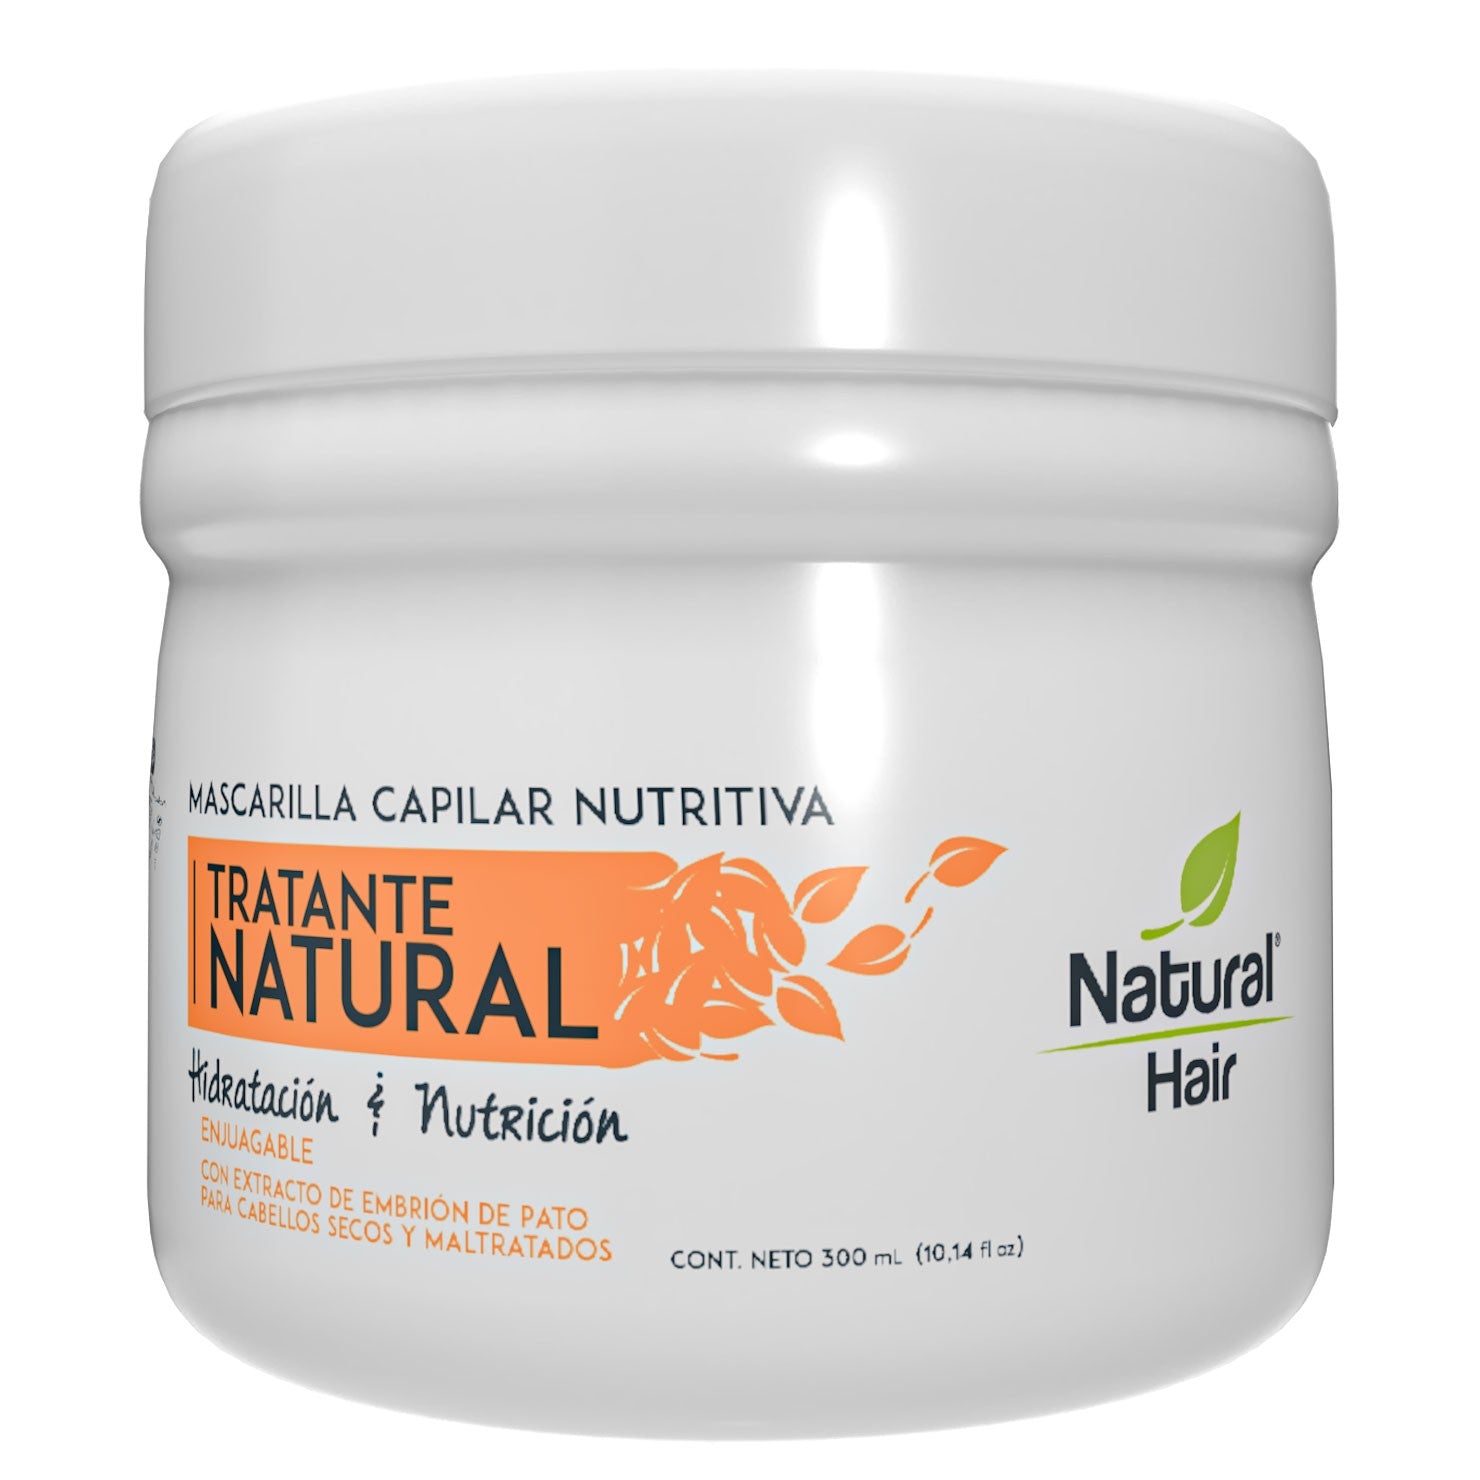 Mascarilla Capilar Nutritiva Tratante Natural - Natural Hair